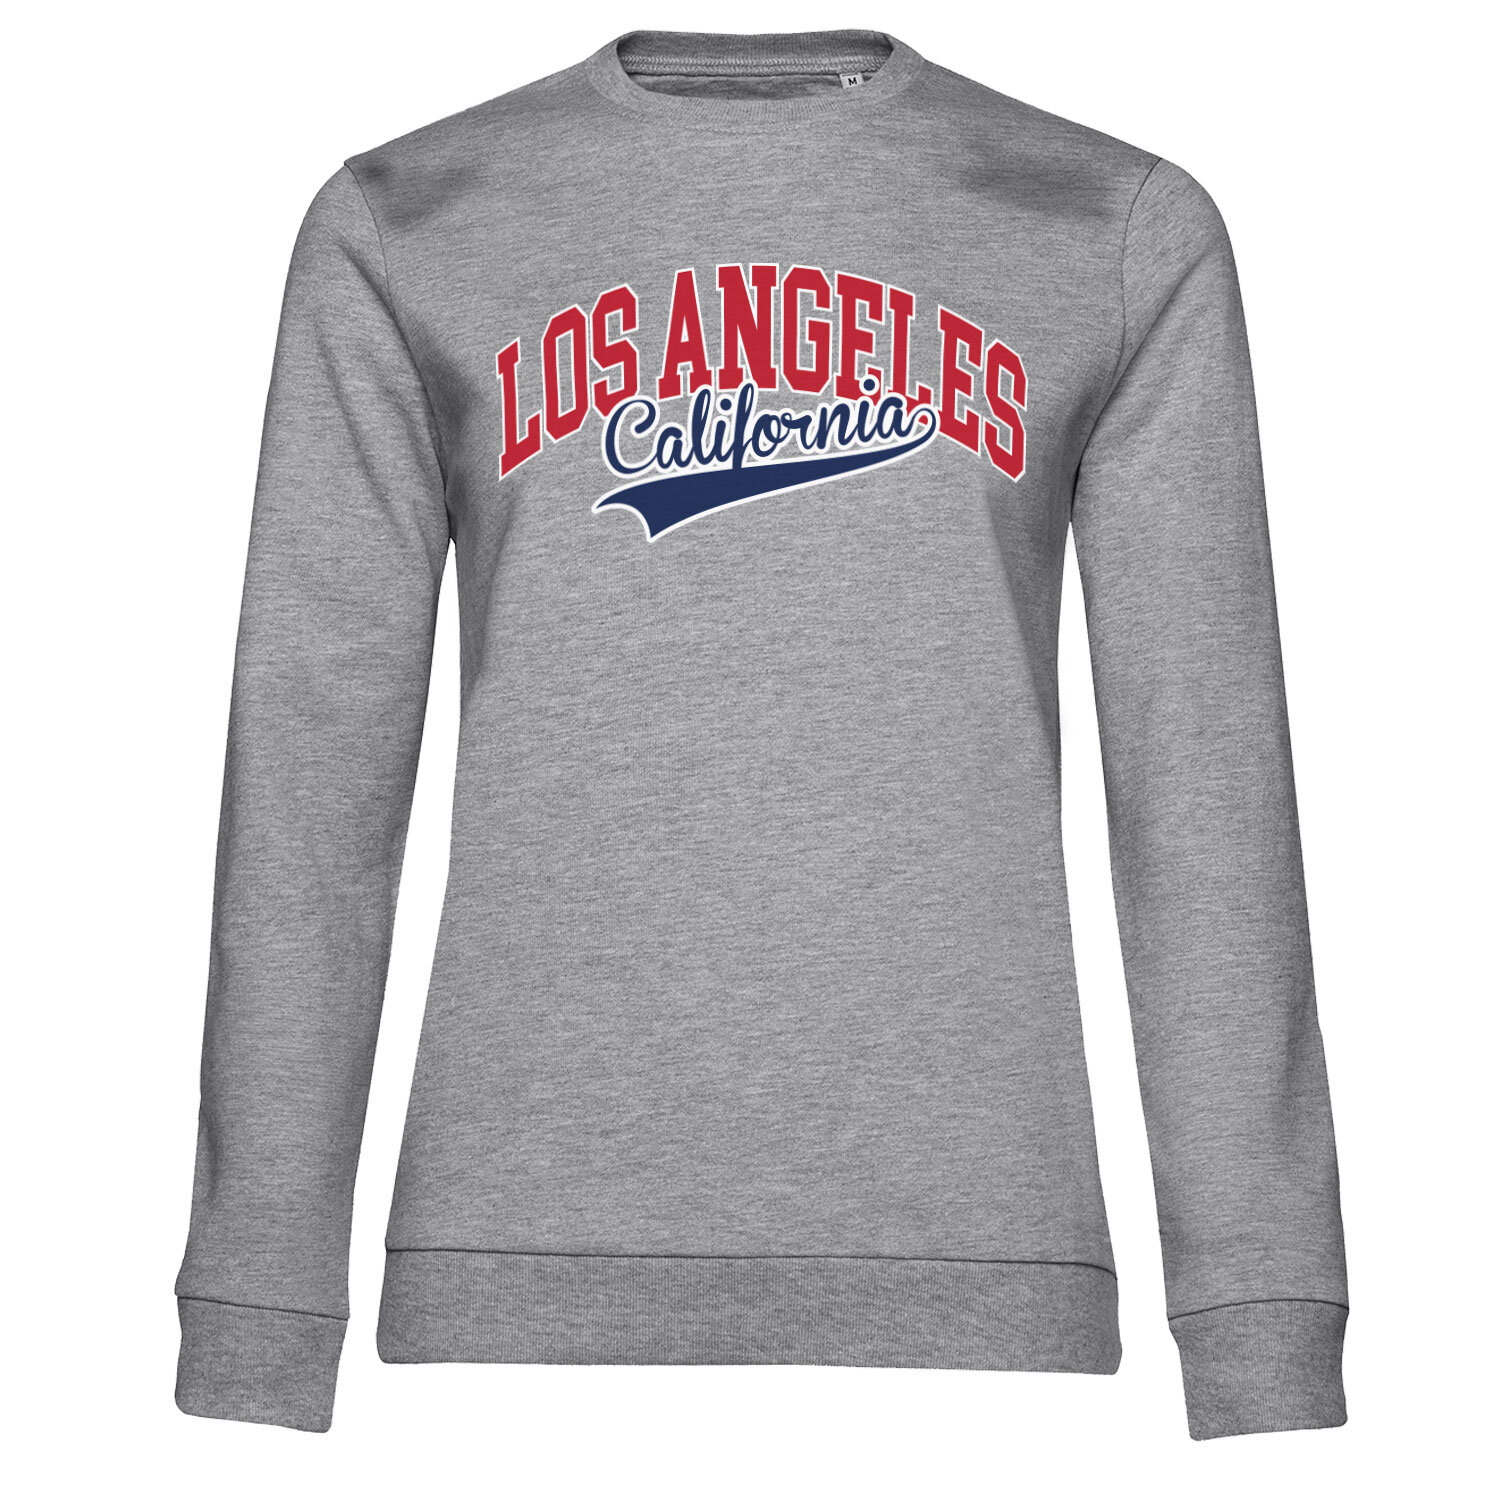 Los Angeles - California Girly Sweatshirt